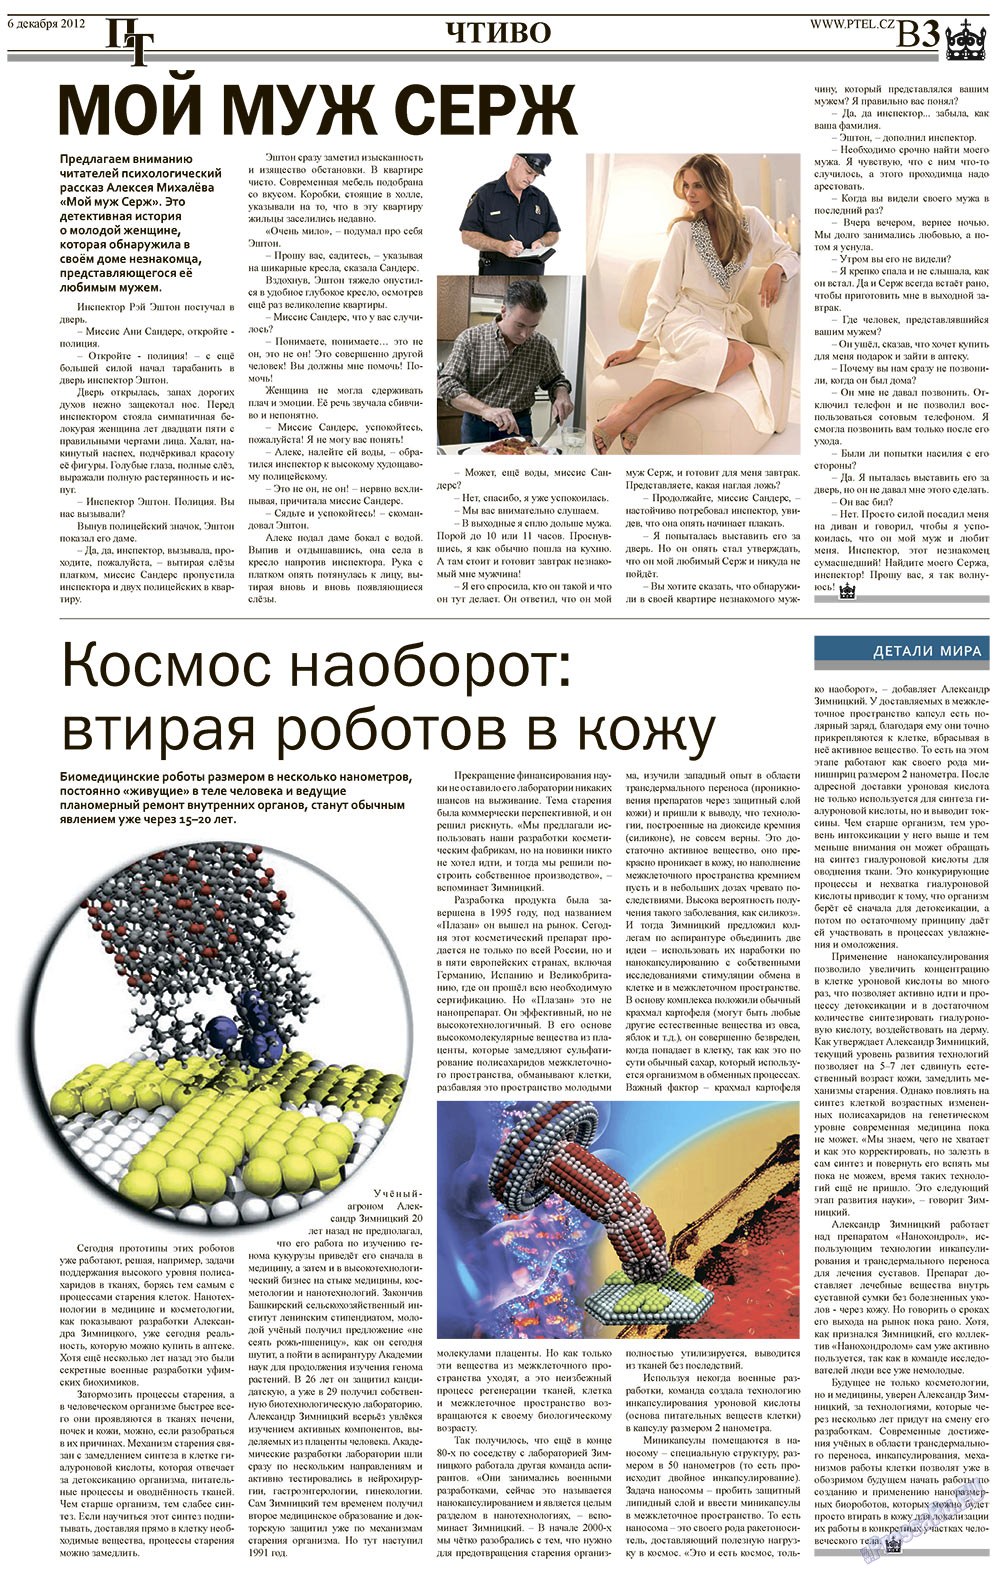 Пражский телеграф, газета. 2012 №48 стр.11